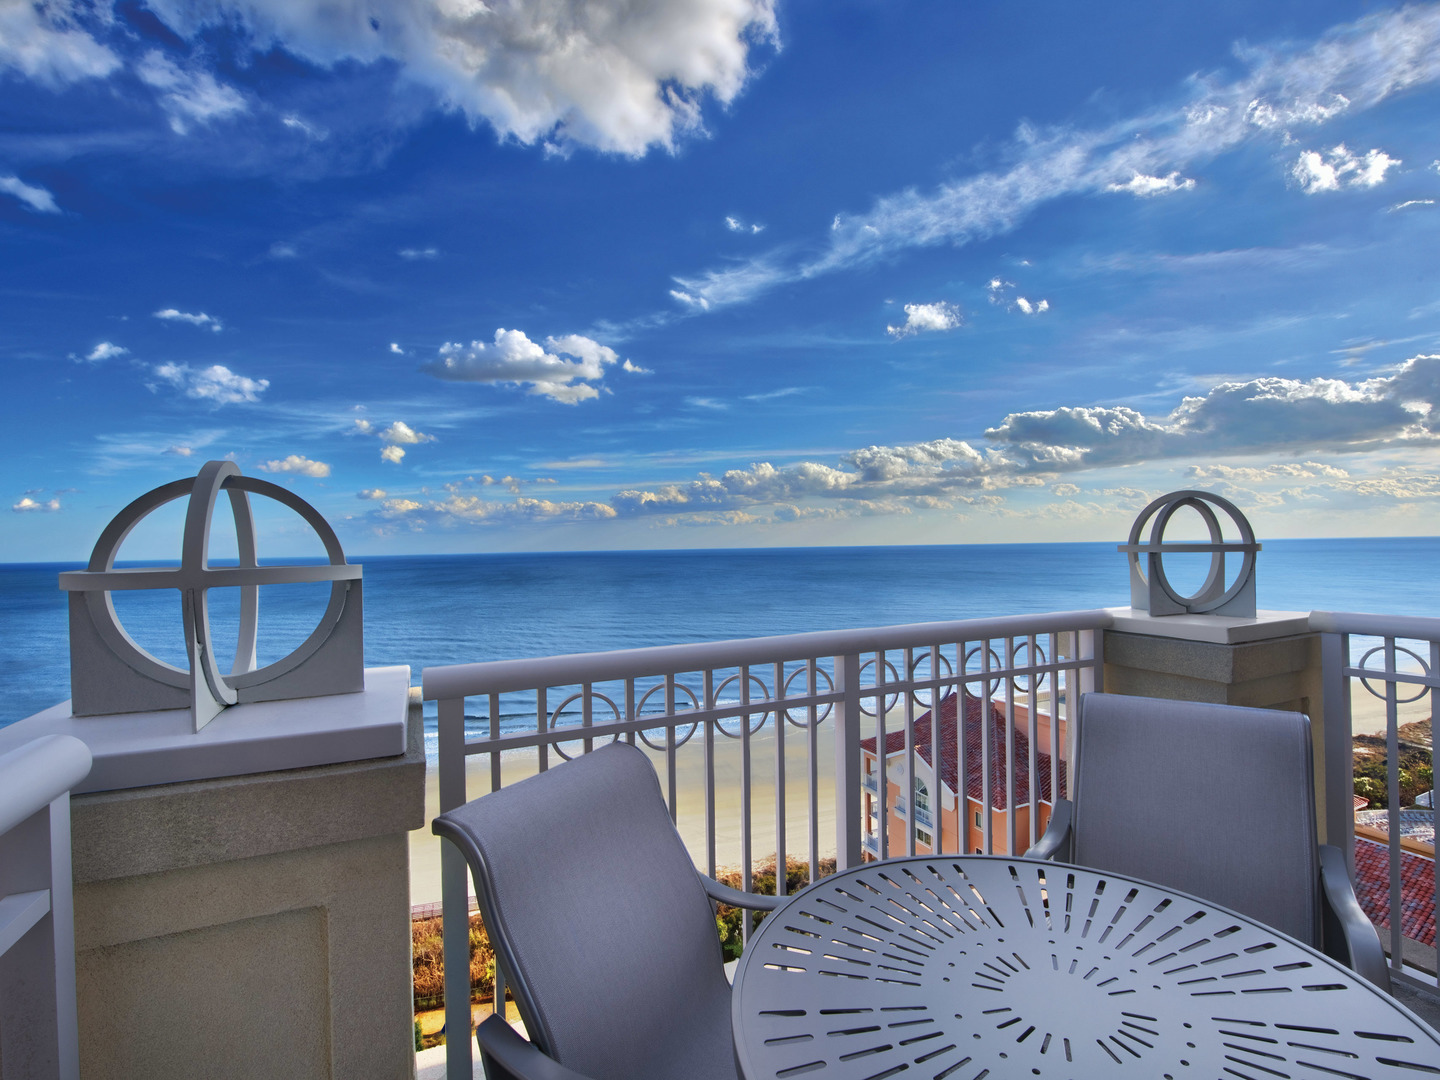 Marriott's OceanWatch Villa Patio. Marriott's OceanWatch is located in Myrtle Beach, South Carolina United States.